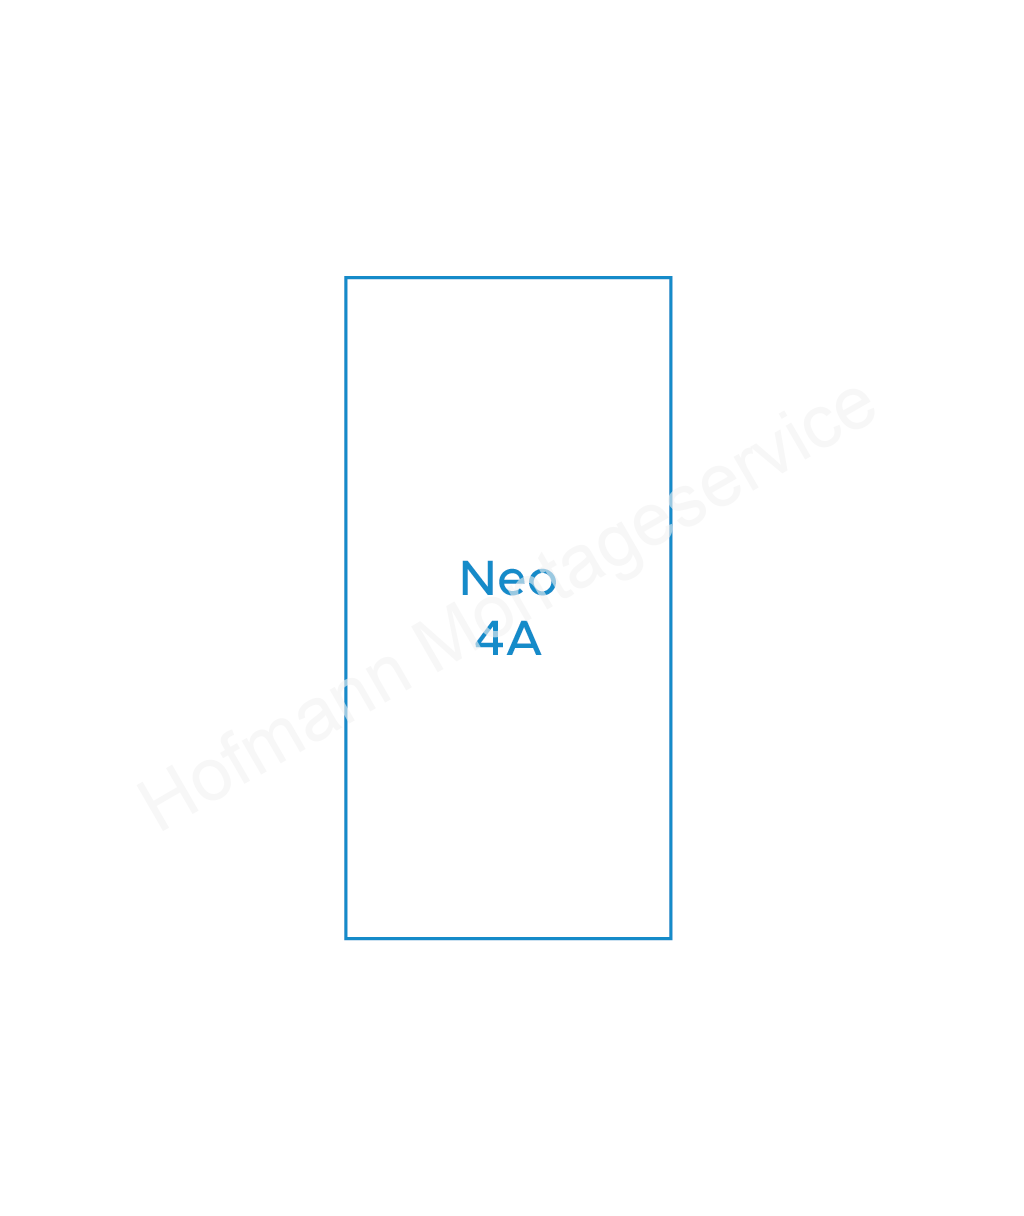 Neo 4A